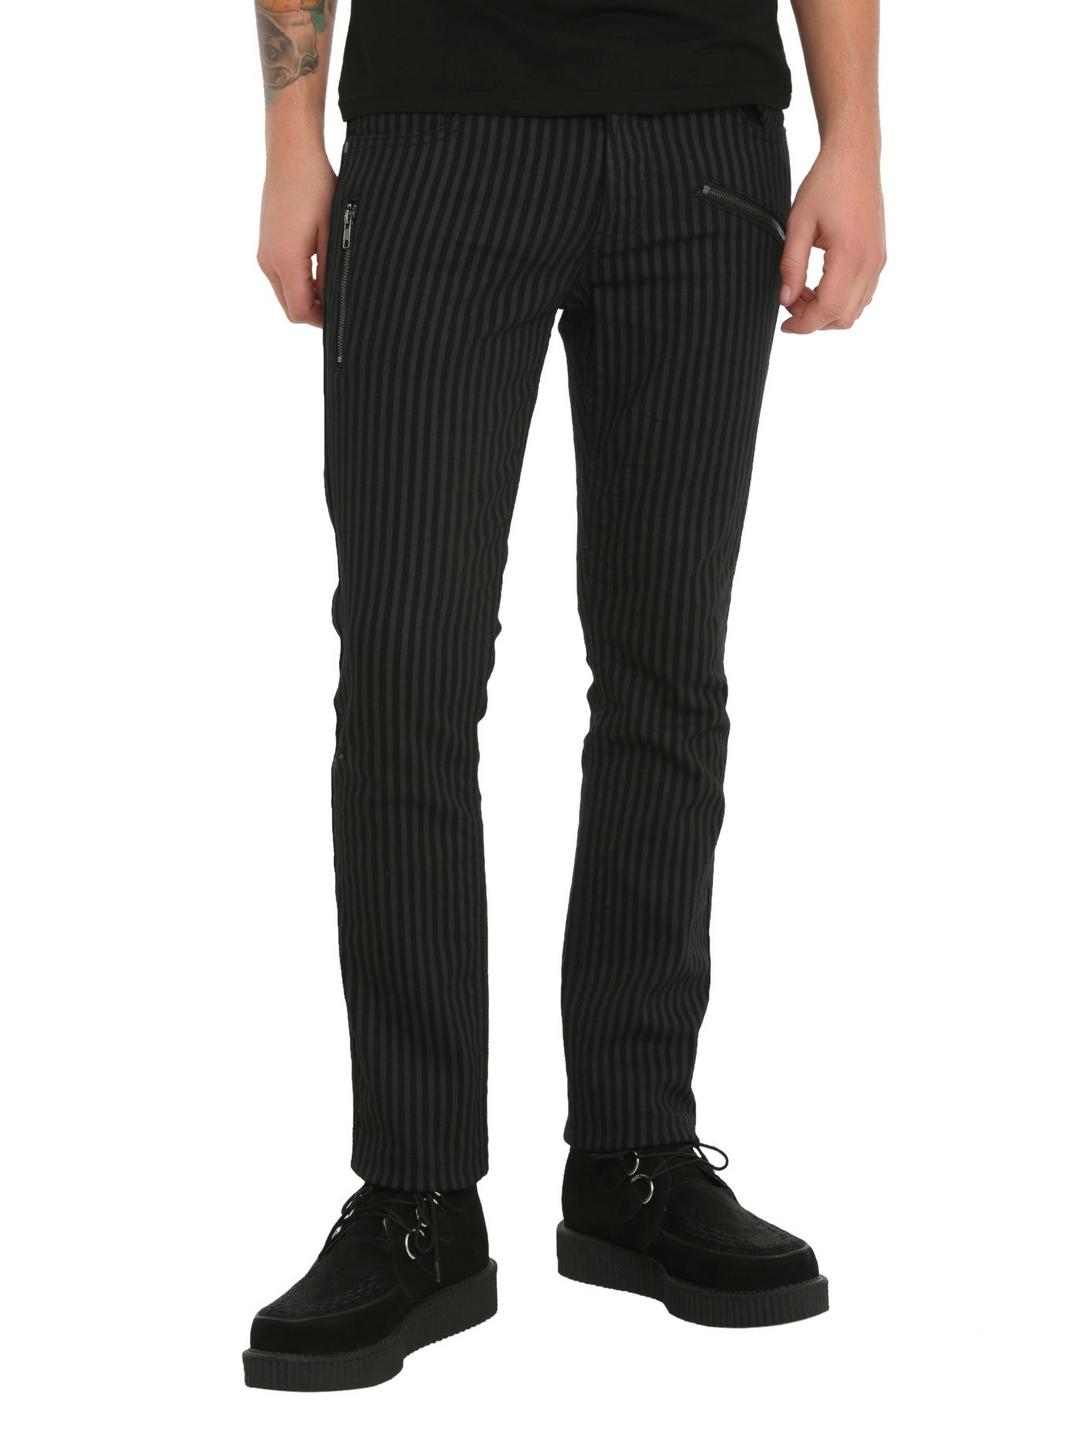 RUDE Black Tonal Stripe Zipper Skinny Jeans, BLACK, hi-res